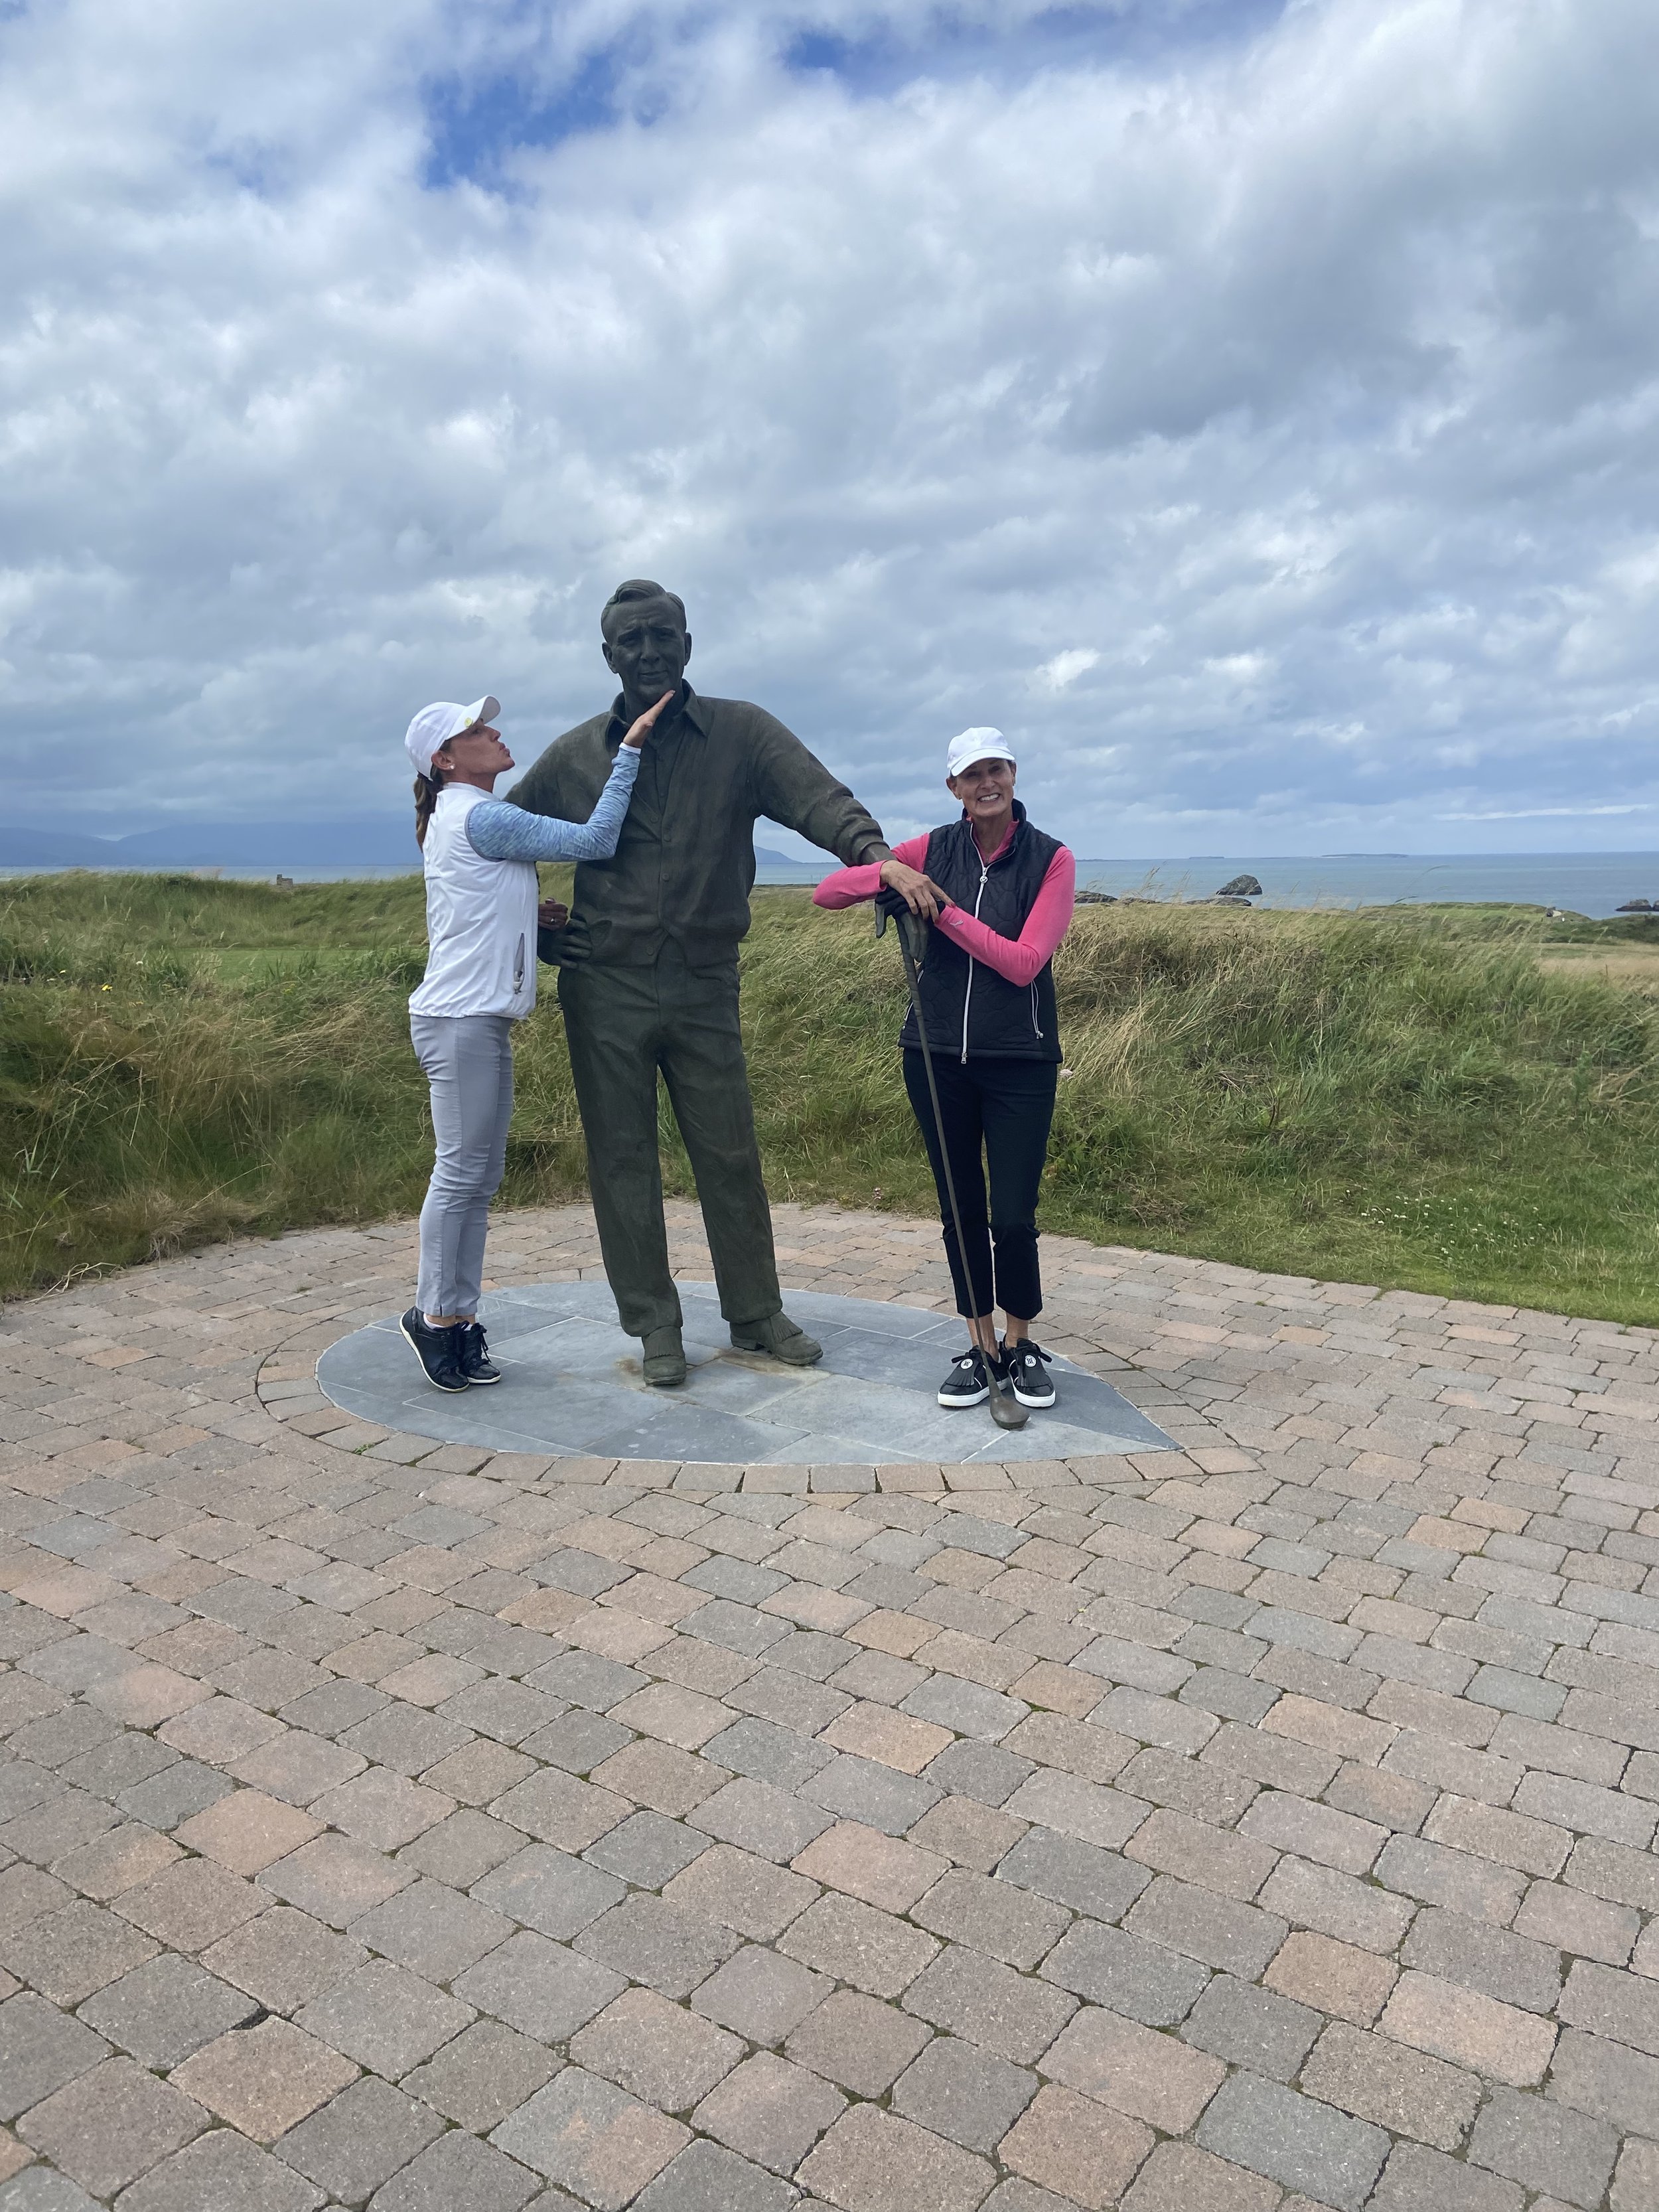 Arnold Palmer at Tralee Golf Club in Ireland